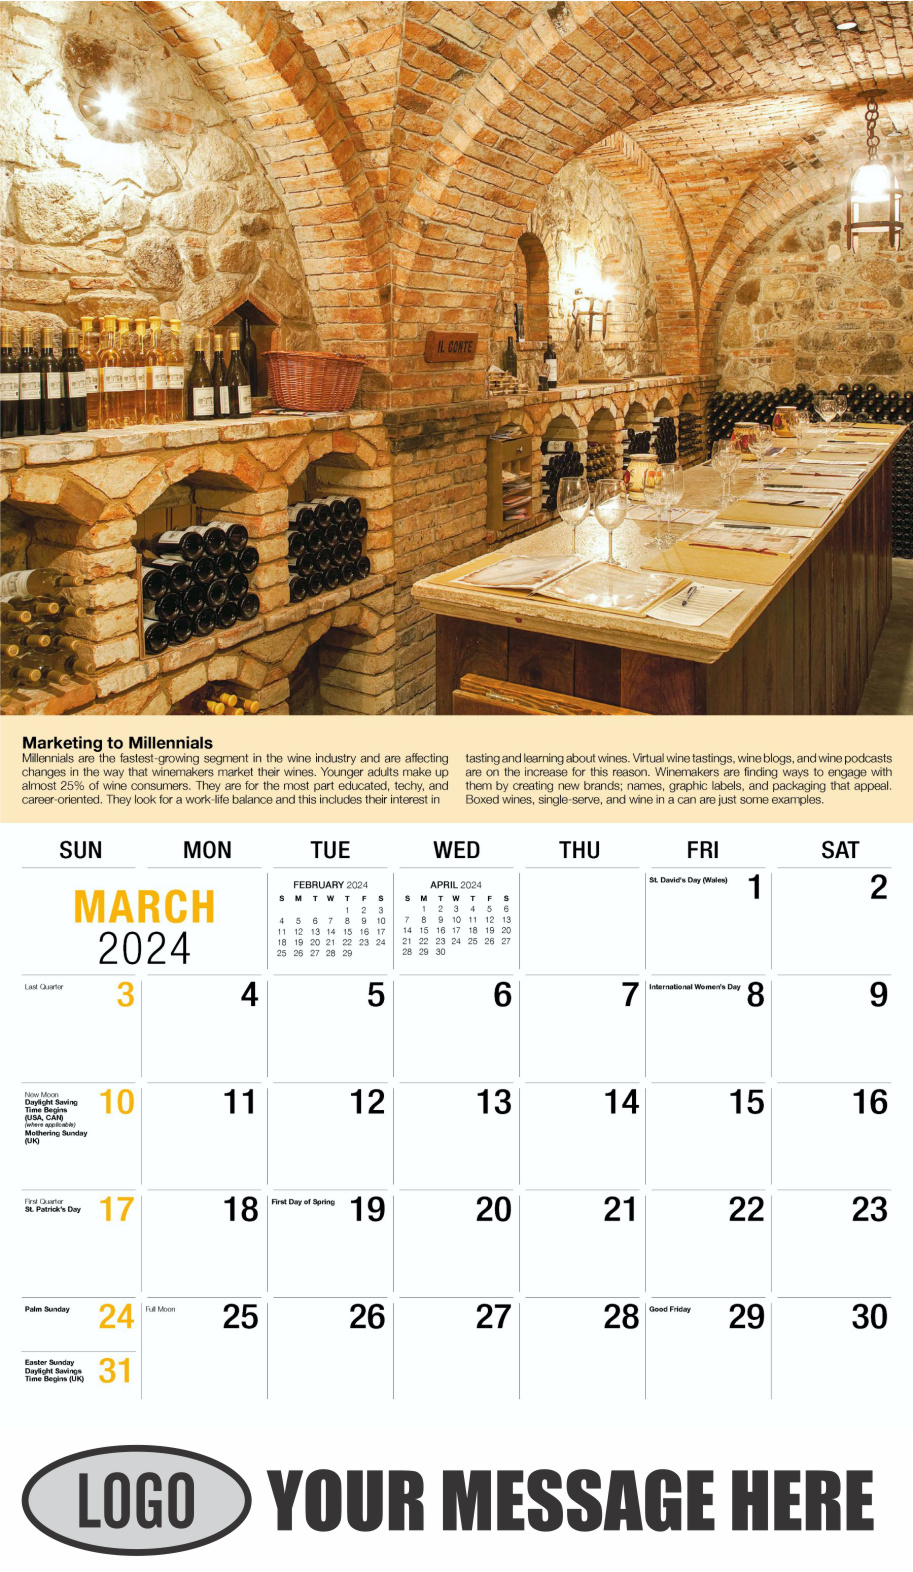 Vintages - Wine Tips 2024 Business Promo Calendar - March